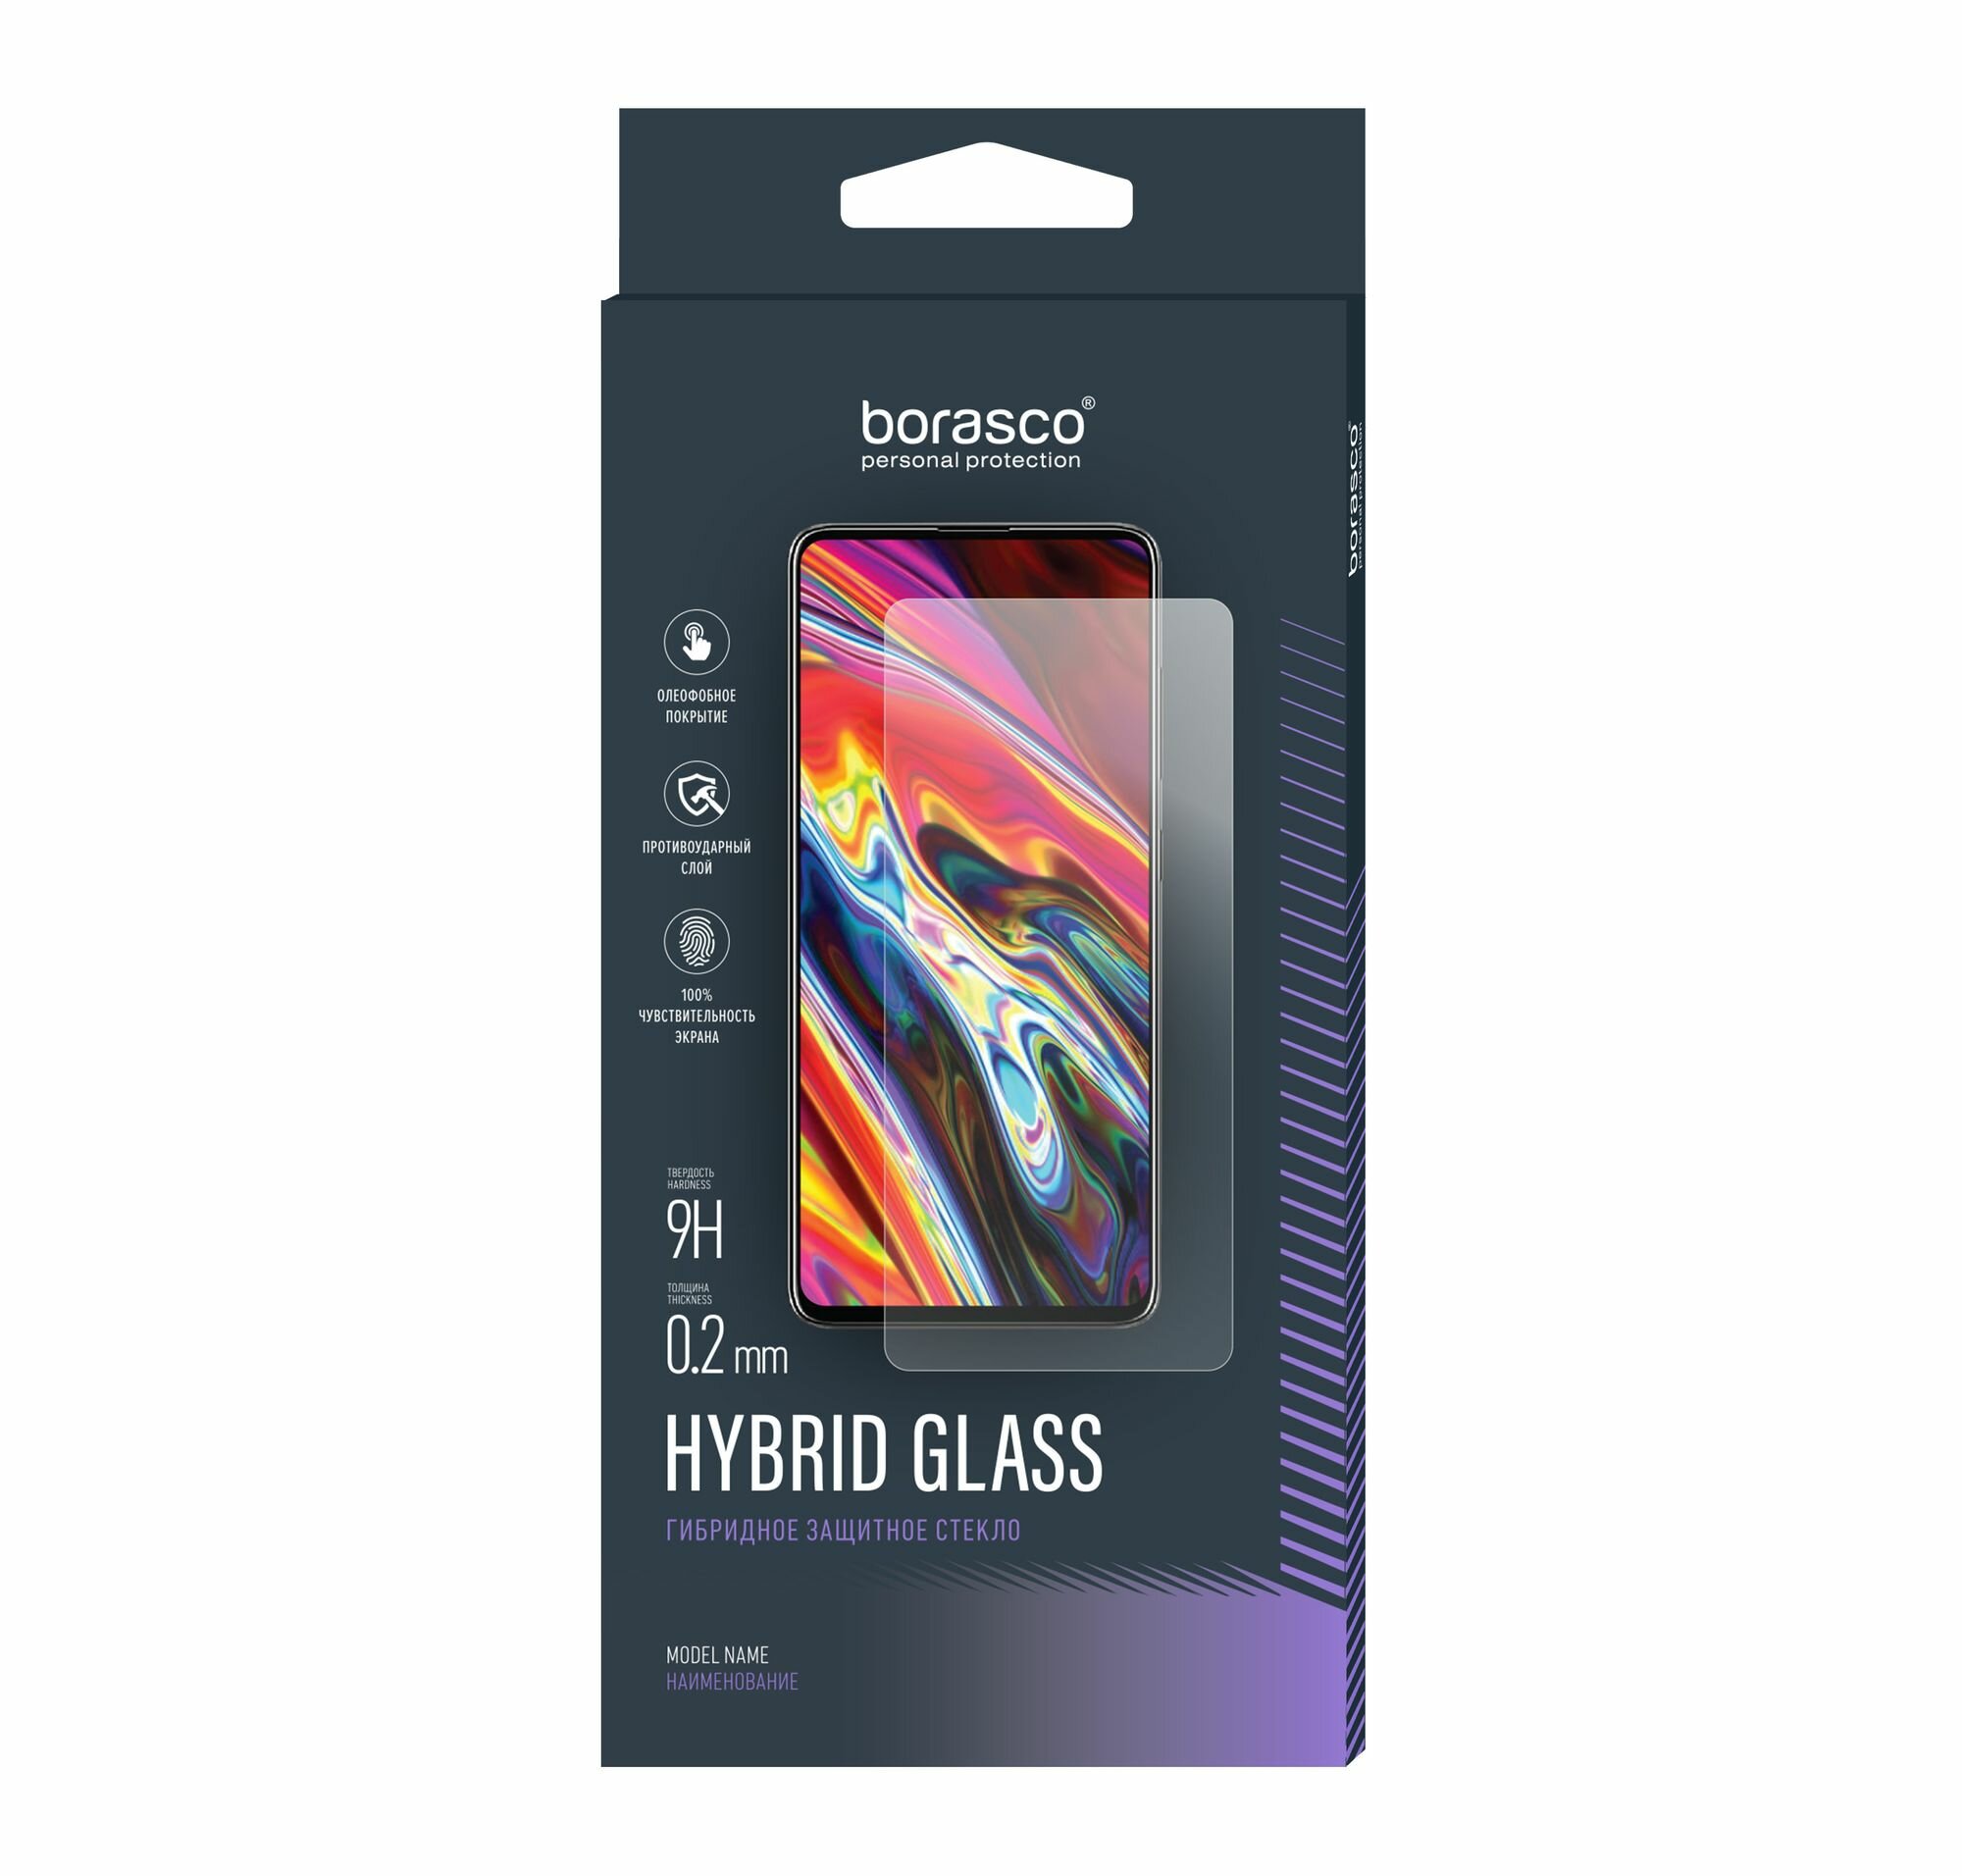 Стекло защитное Hybrid Glass VSP 026 мм для ASUS Zenfone 4 Max M1 ZB555KL